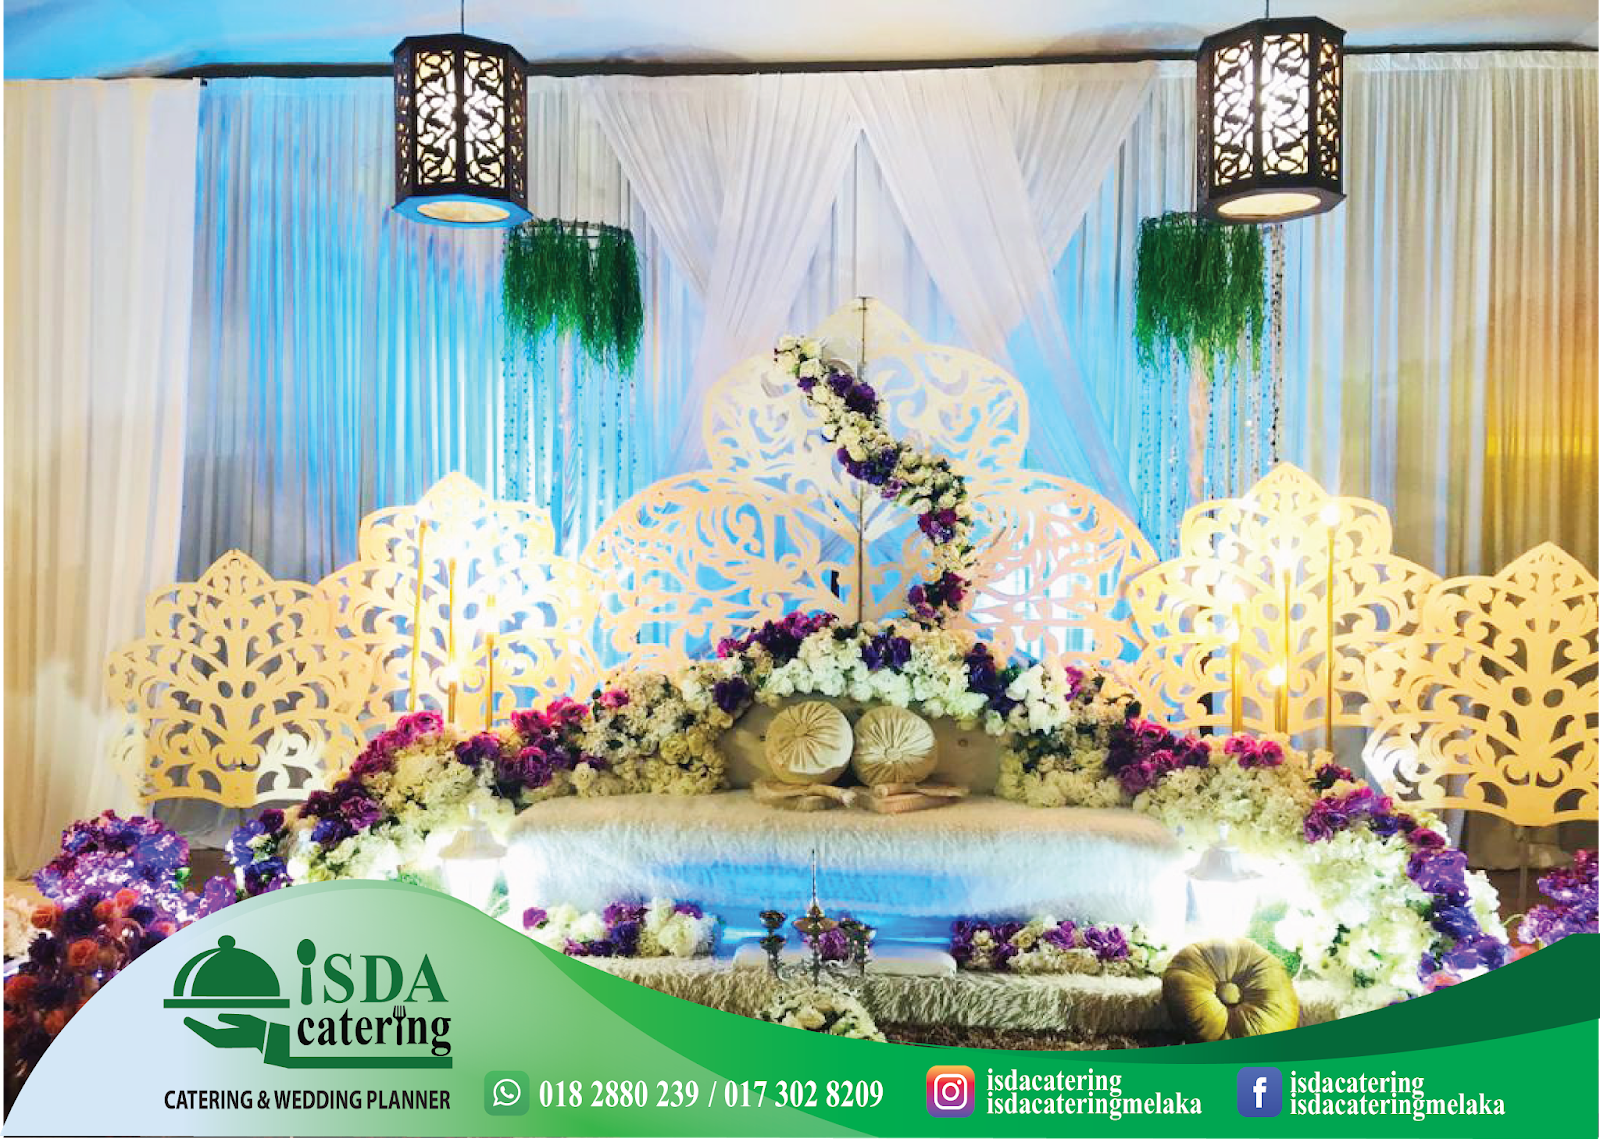 ISDA Catering & Wedding Planner (LLP0009189-LGN)